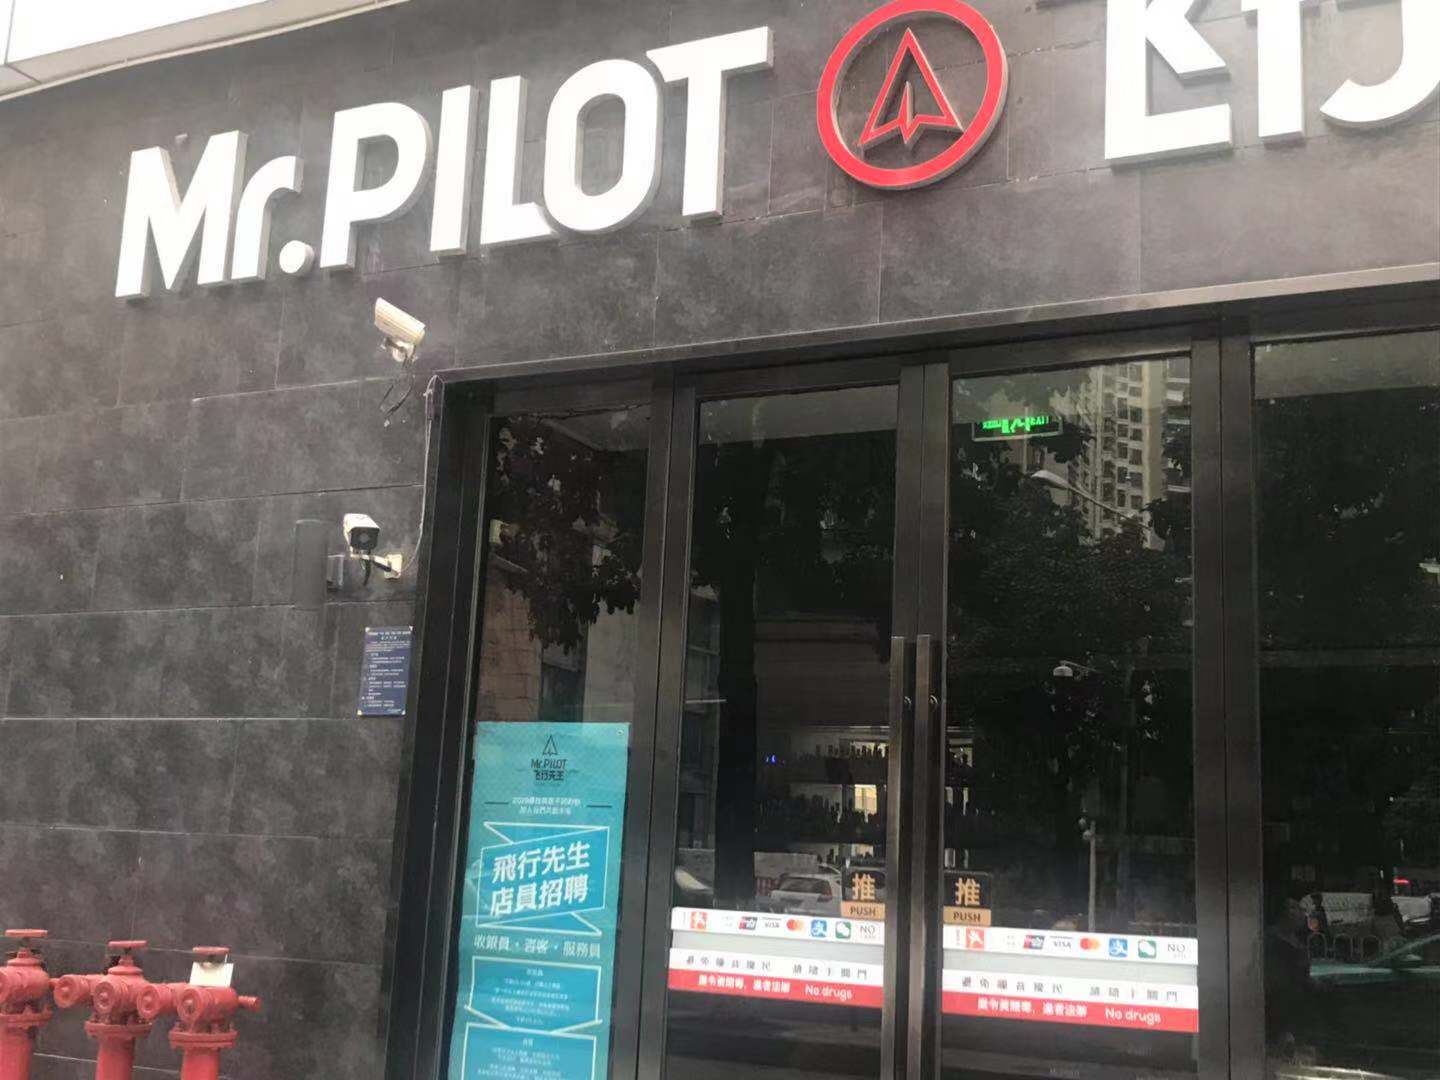 mr-pilot-sign-removed-guangzhou.jpg